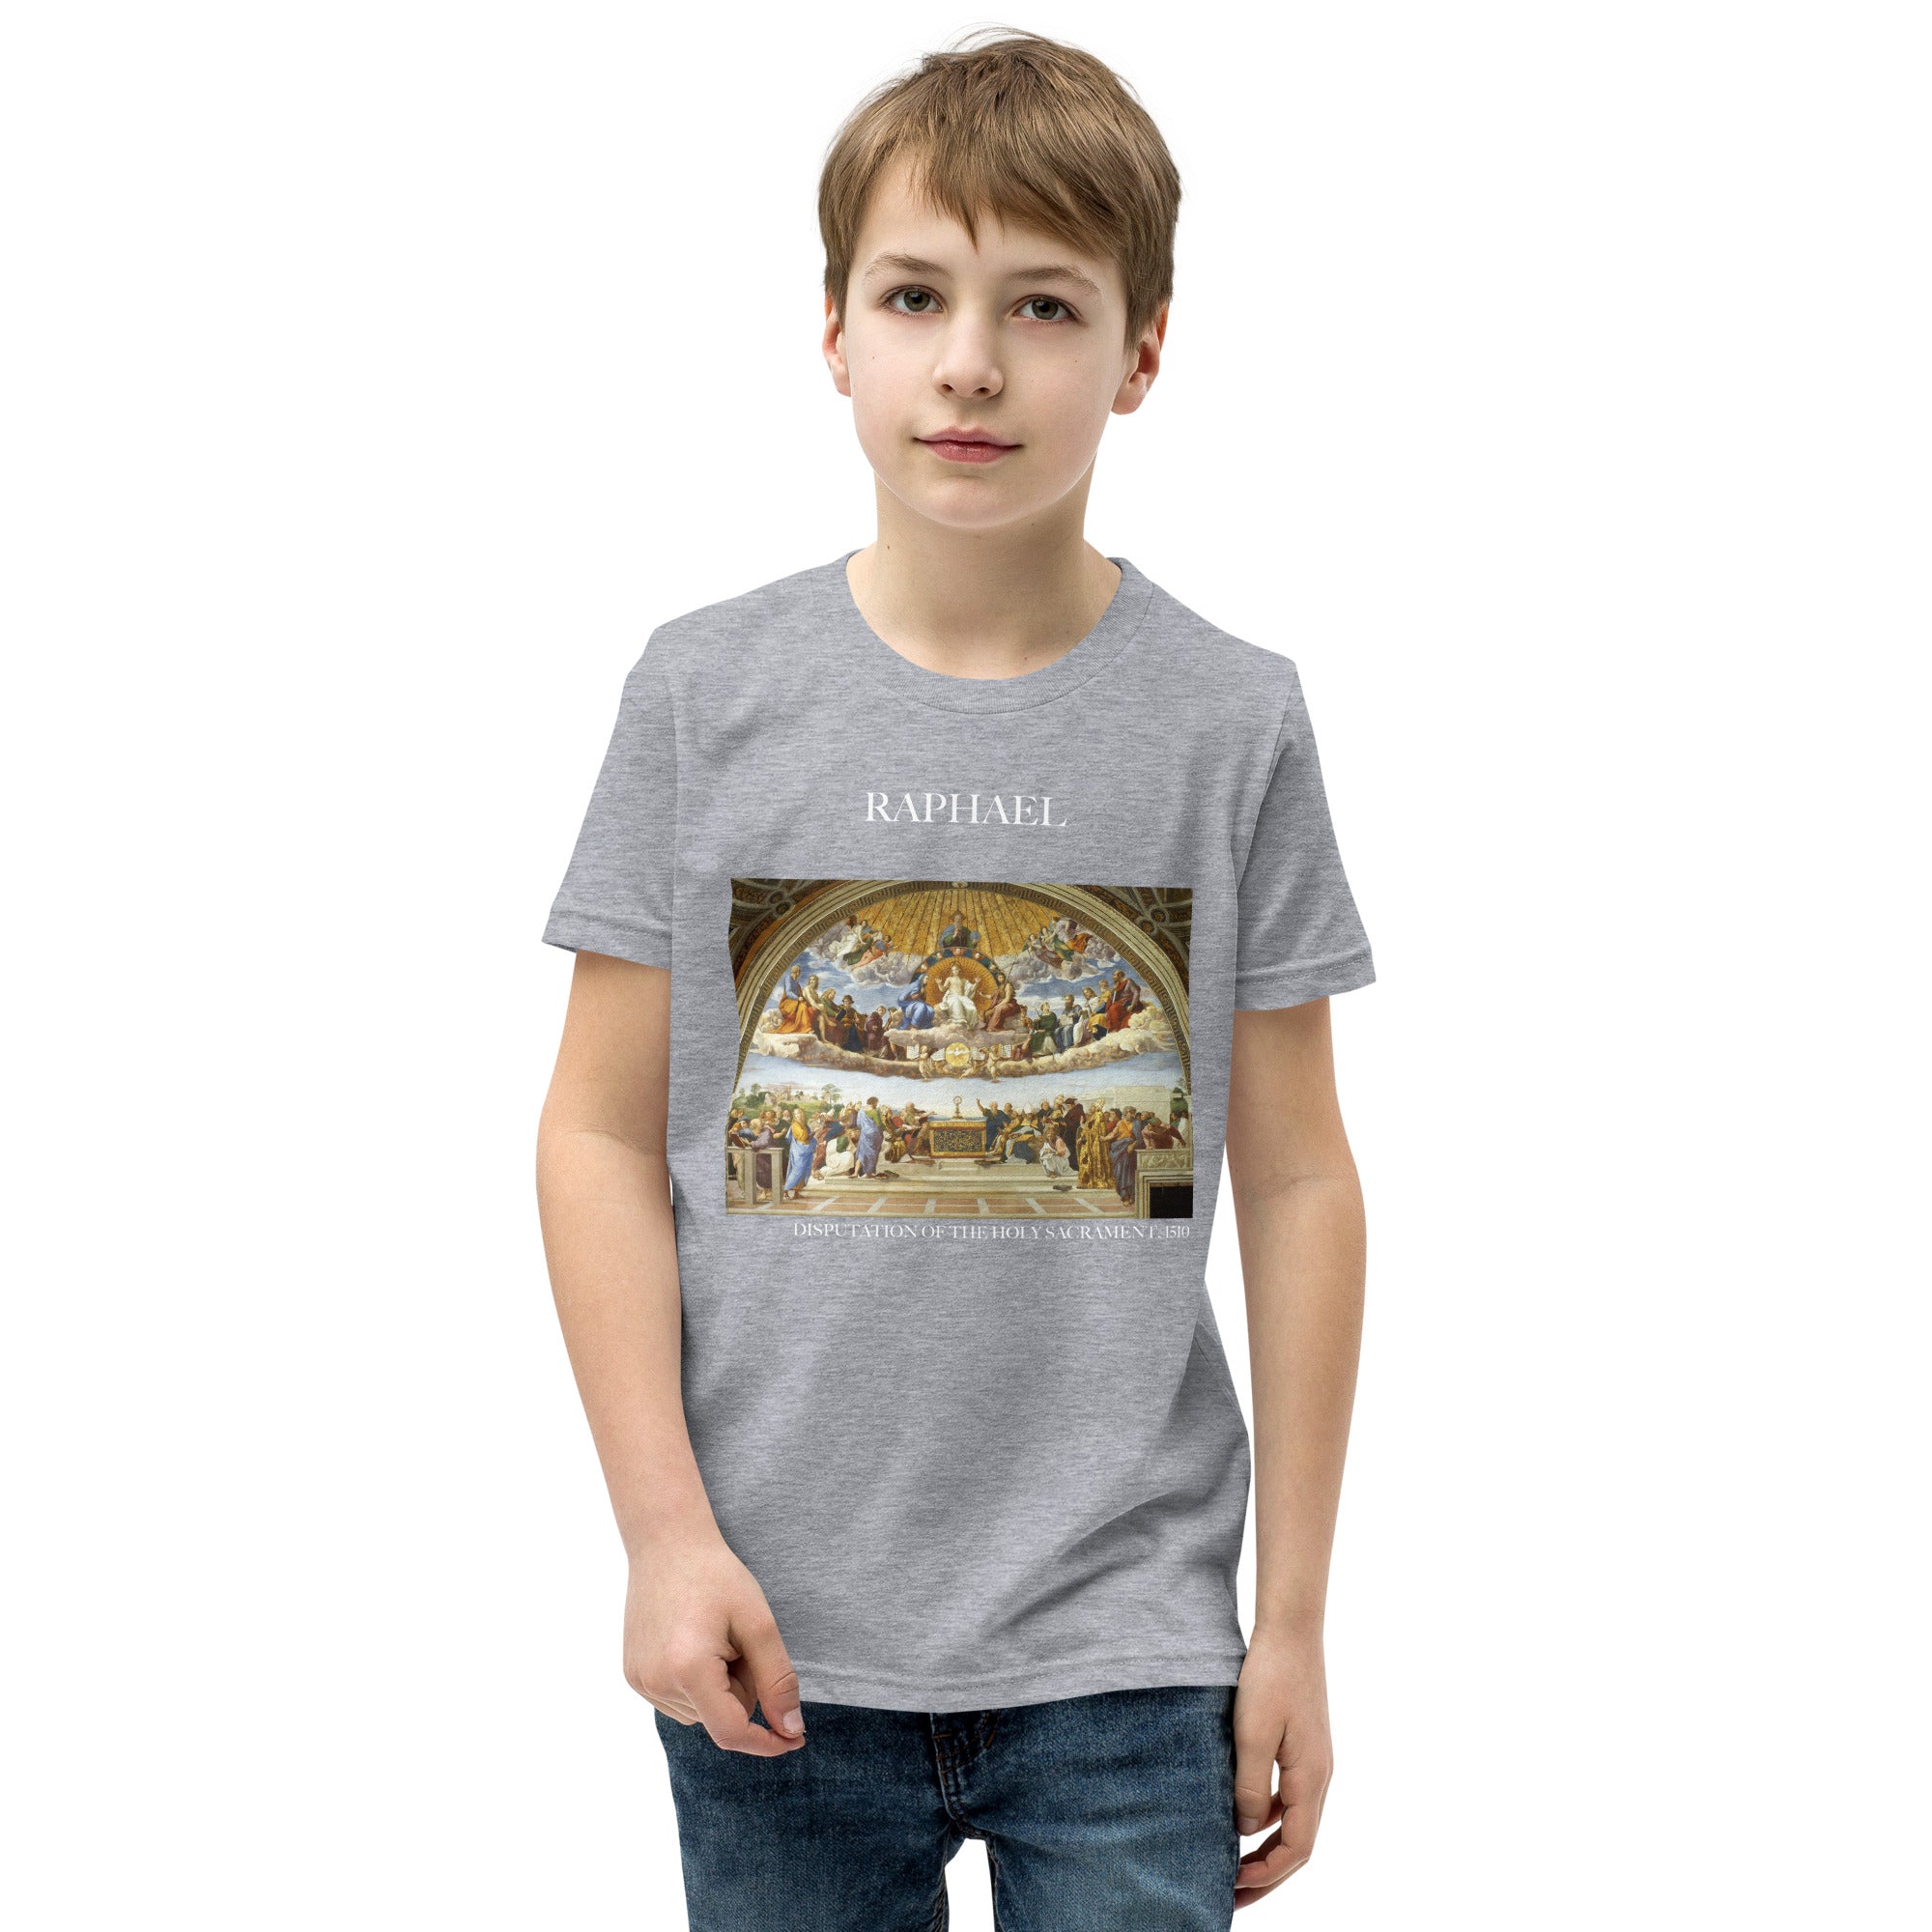 Raphael 'Disputation of the Holy Sacrament' Famous Painting Short Sleeve T-Shirt | Premium Youth Art Tee